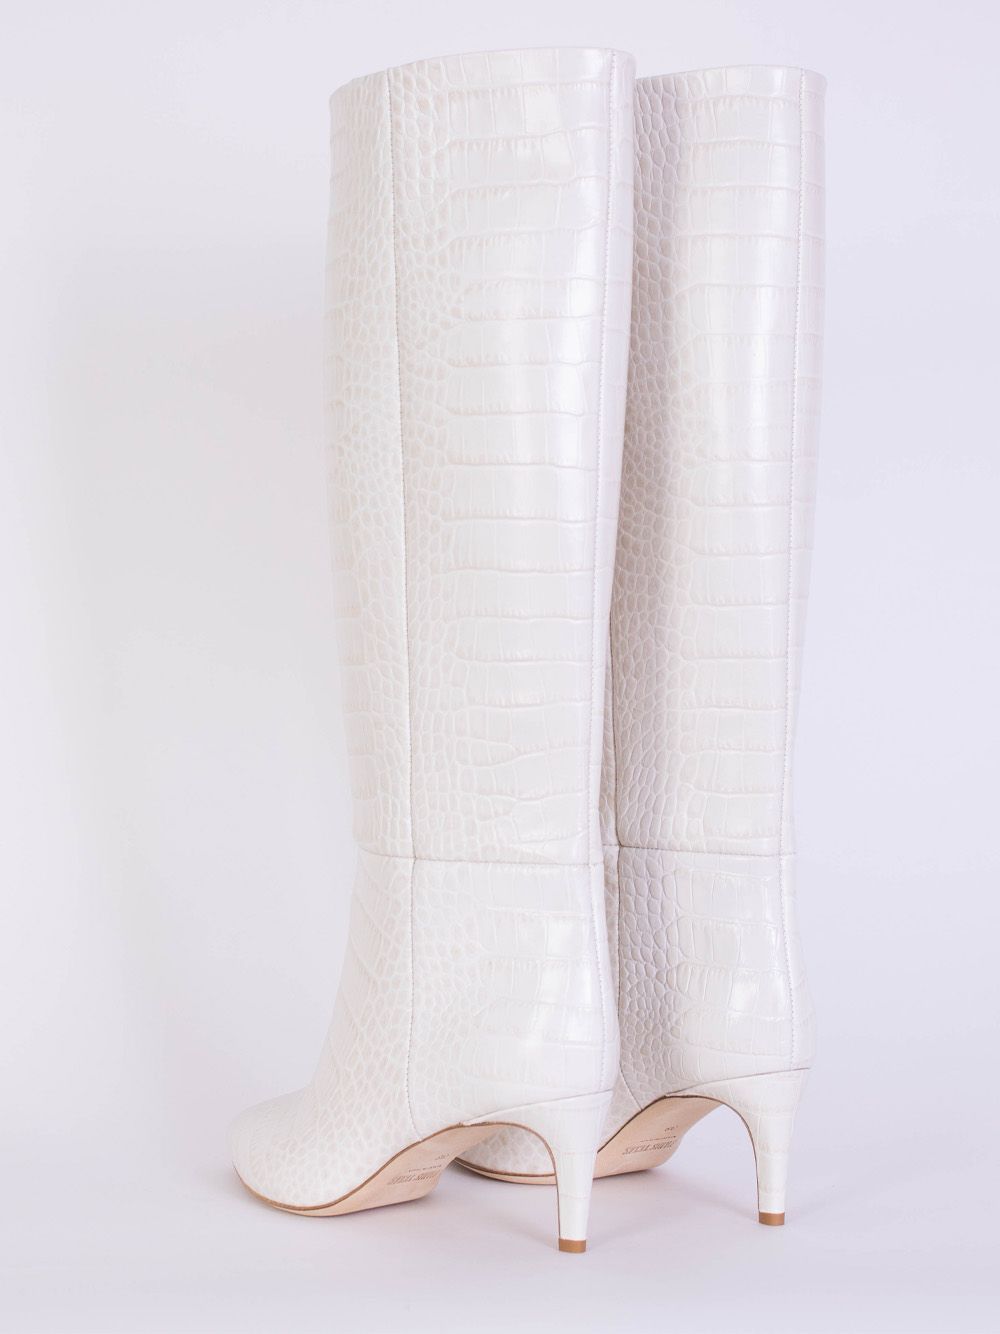 Paris Texas Croco Leather Print Stiletto 60 Boot in Ivory